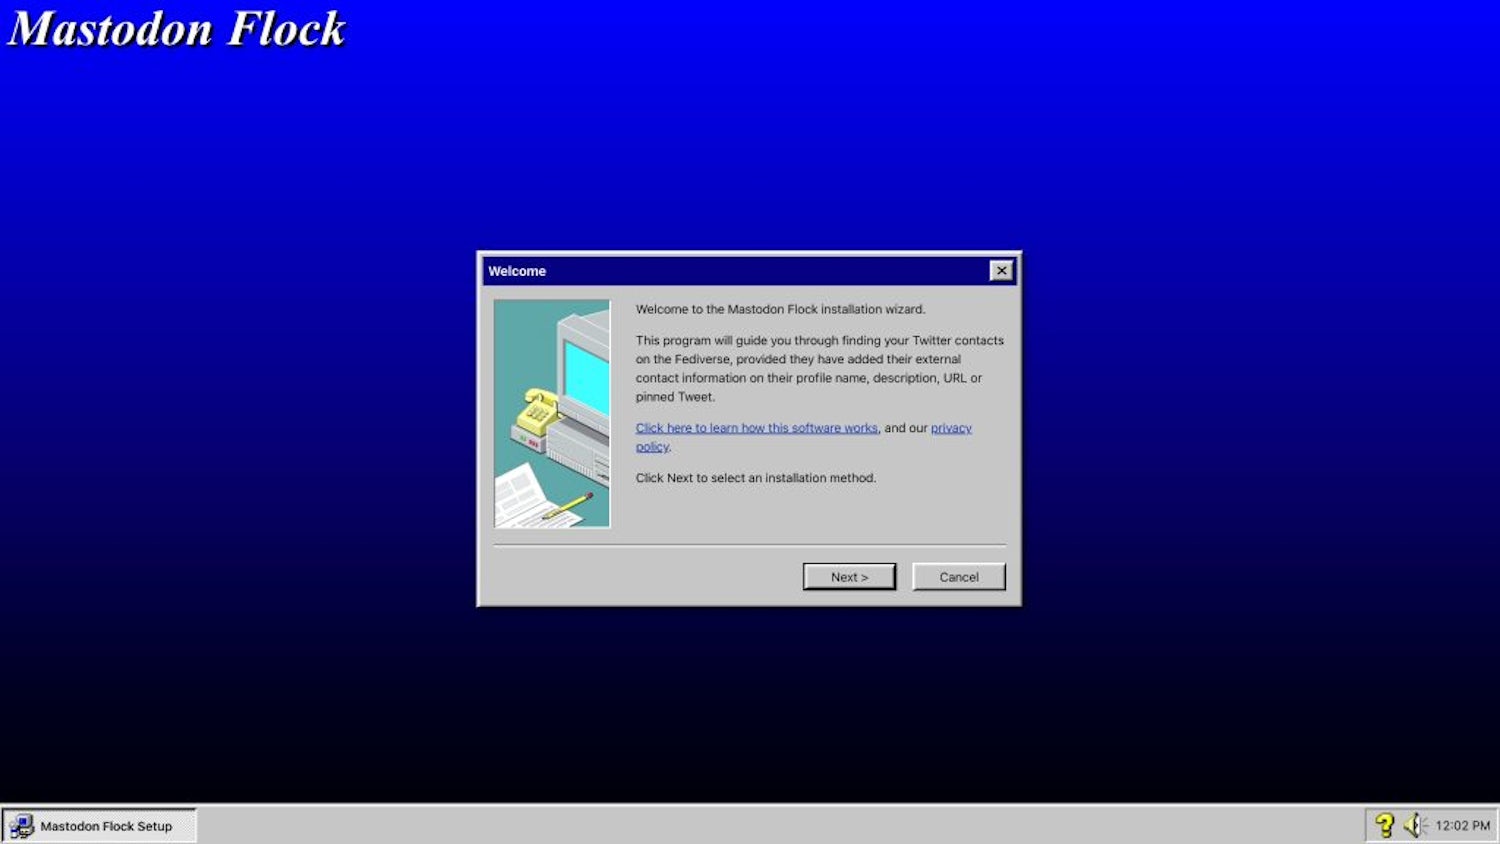 The Mastodon Flock start screen, which looks like a Windows 95 installer 